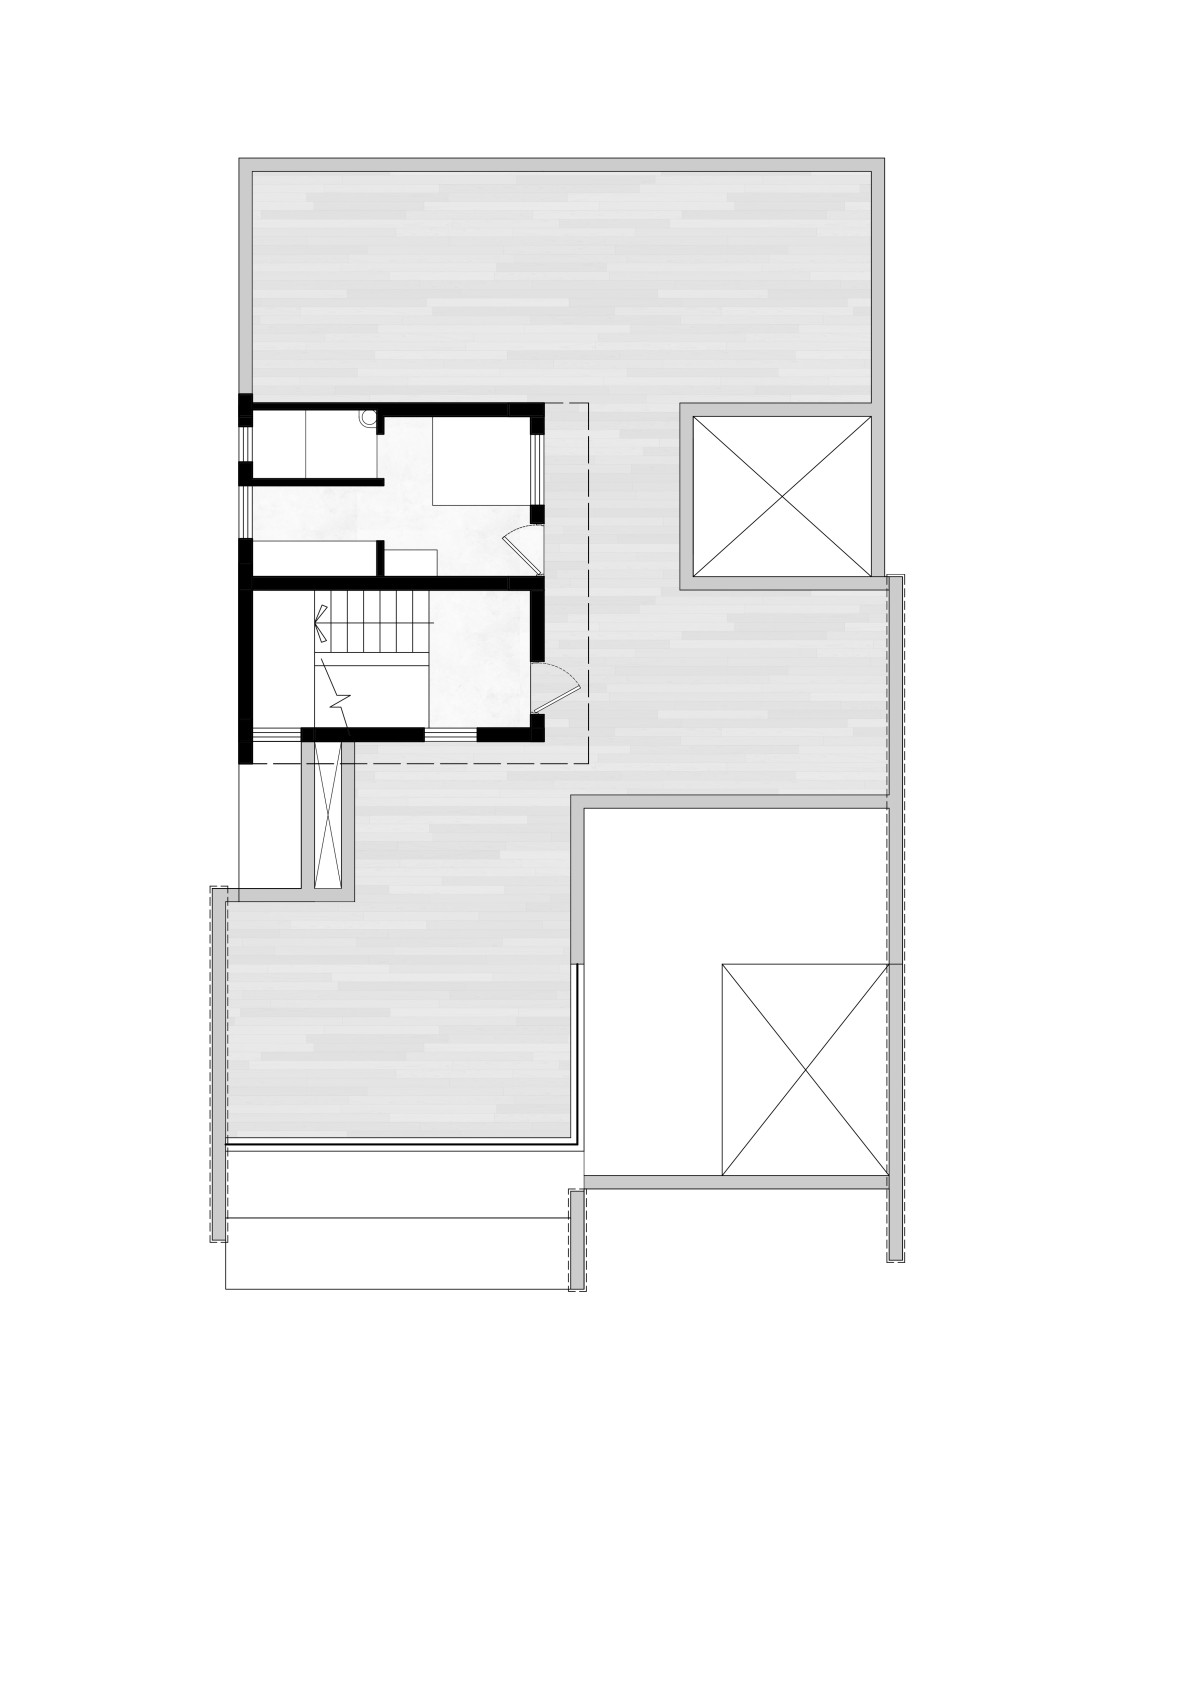 Third Floor Plan of Neralu by Jalihal Associates